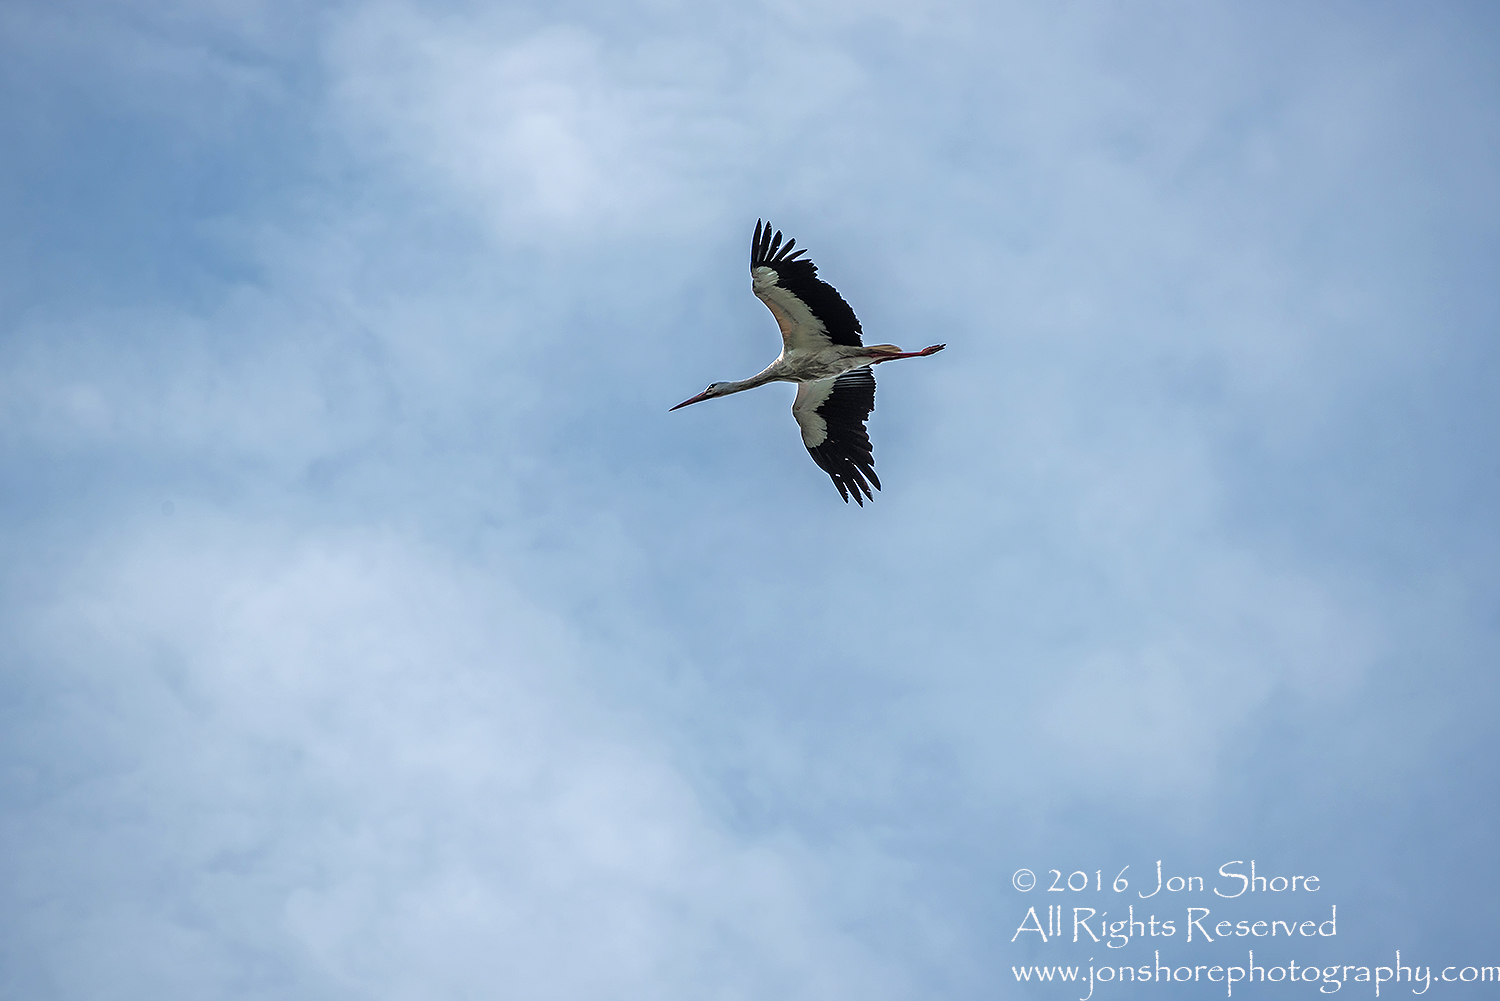 Stork flying Latgale, Latvia. Tamron 300mm